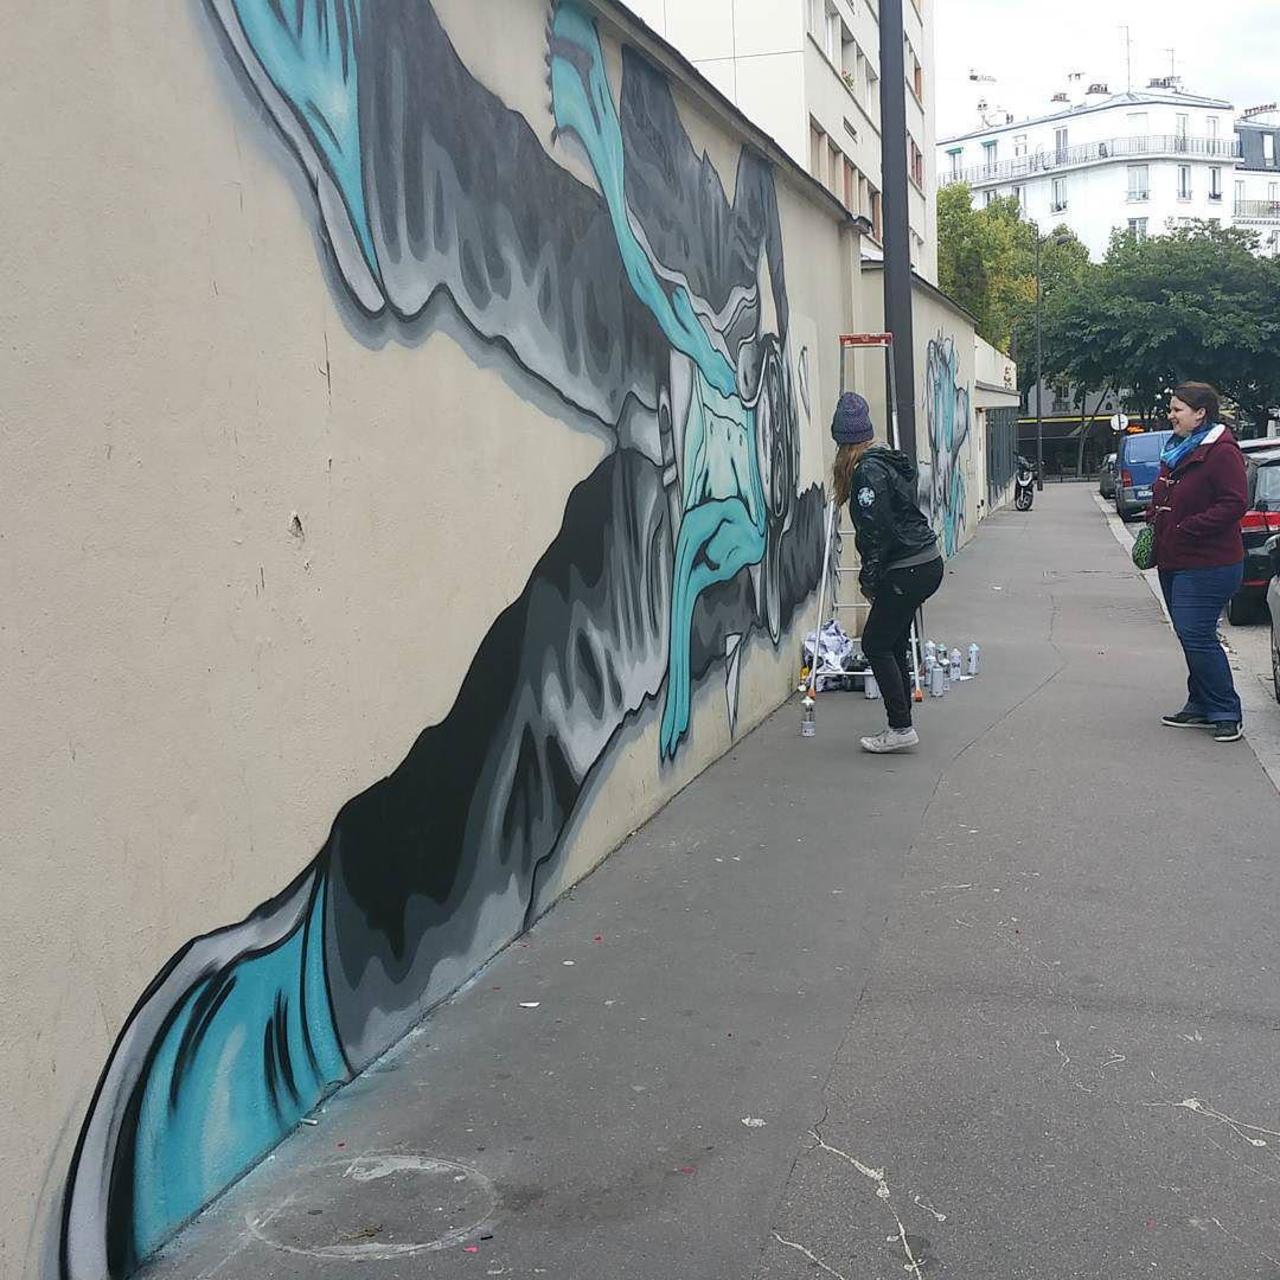 #Paris #graffiti photo by @vbouton.psl http://ift.tt/1L1u45z #StreetArt http://t.co/mSd0ERXopz